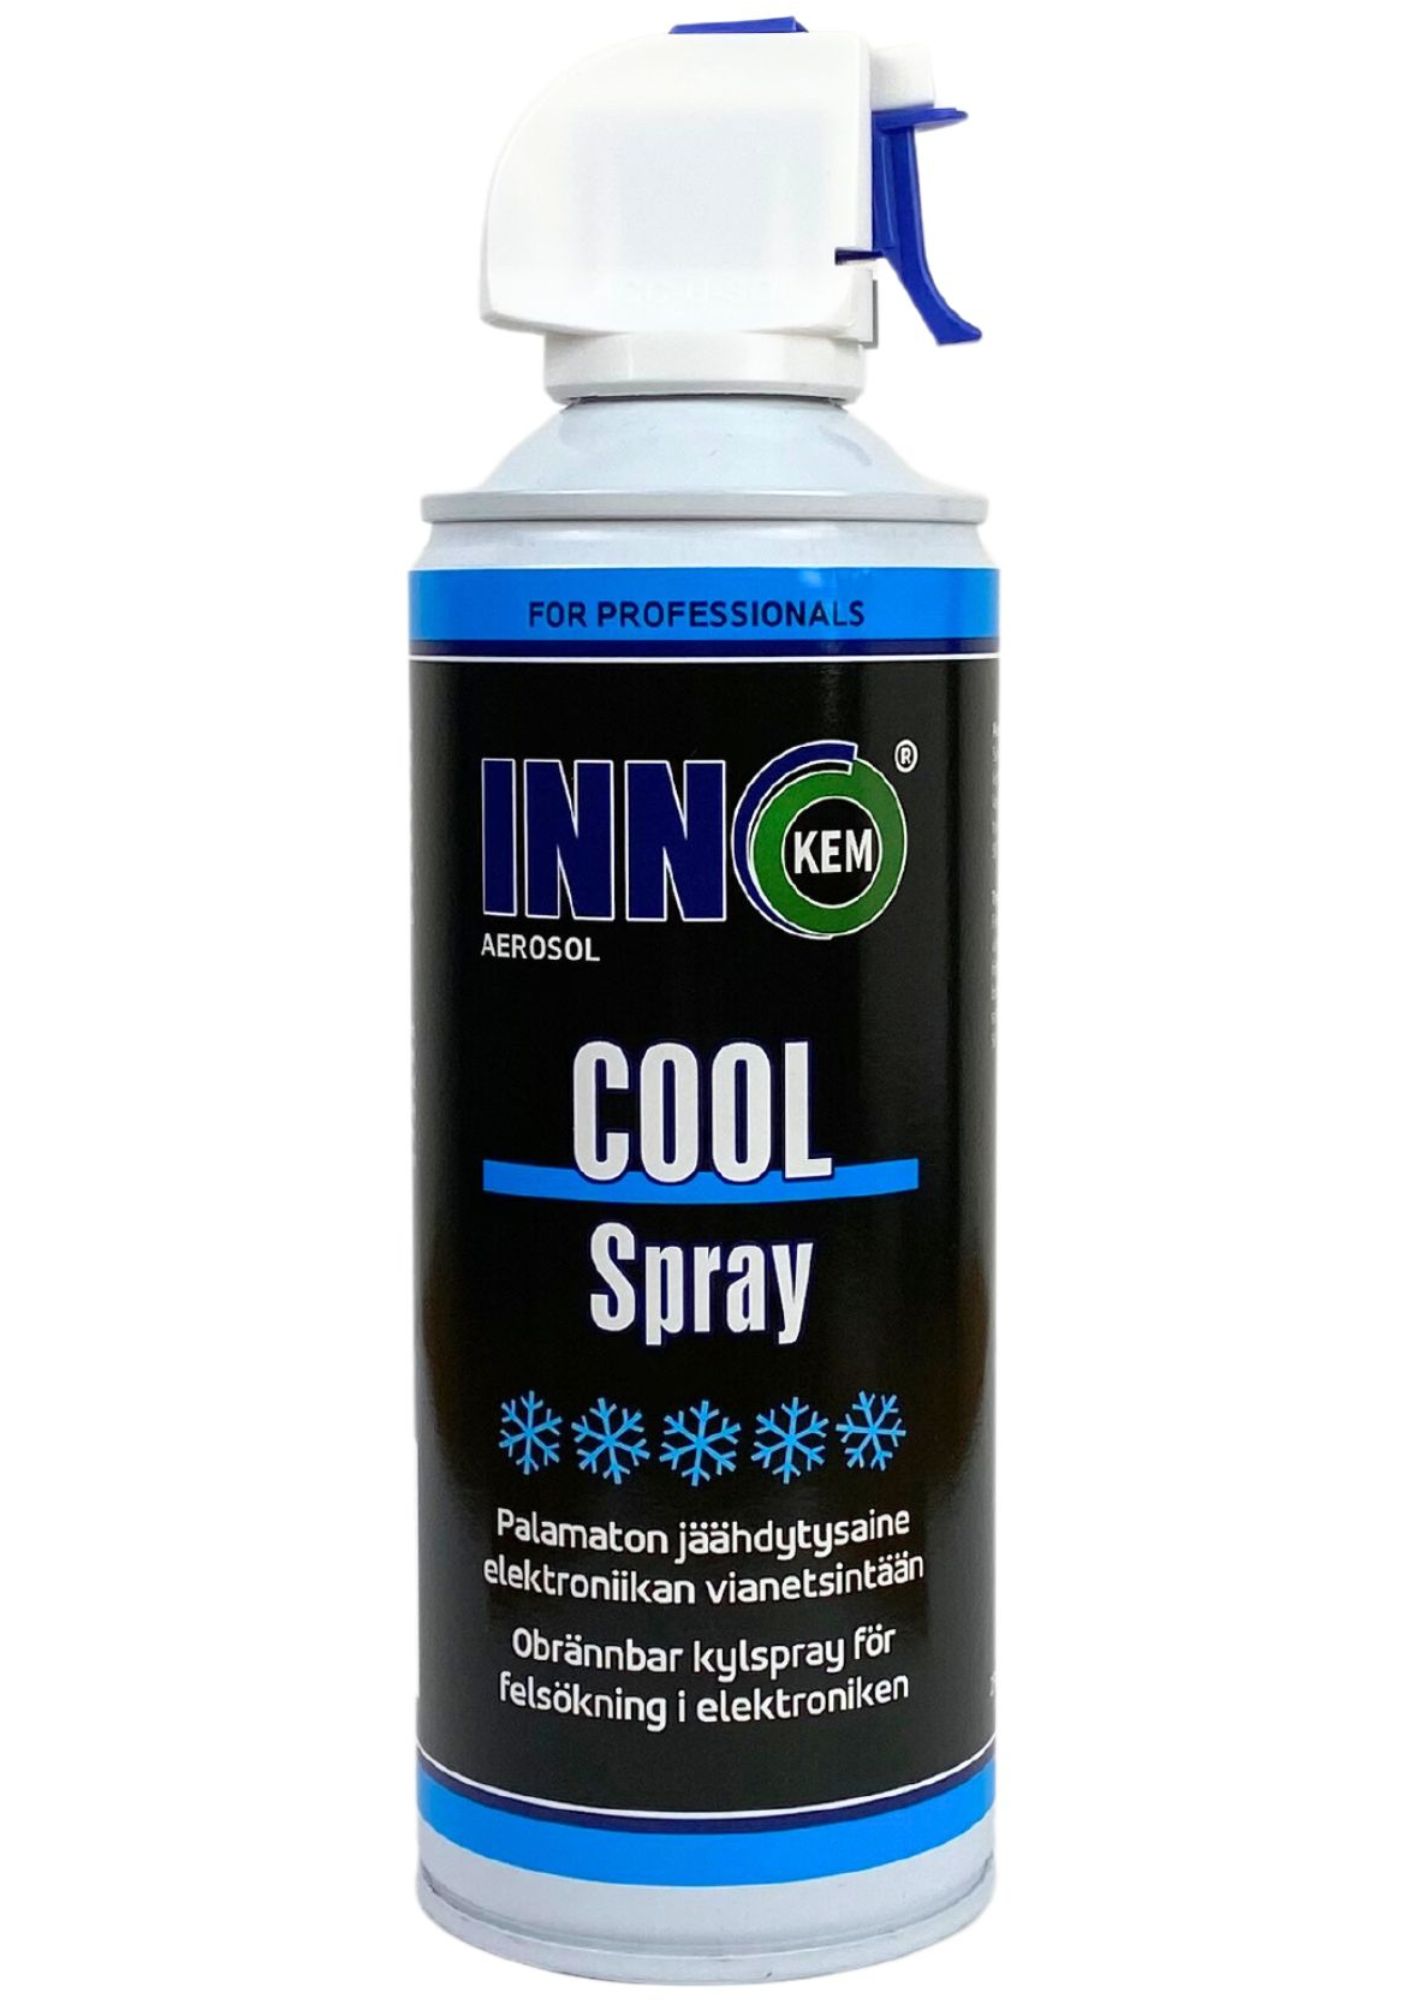 INNOKEM Cool Spray Kylmäspray 400ml